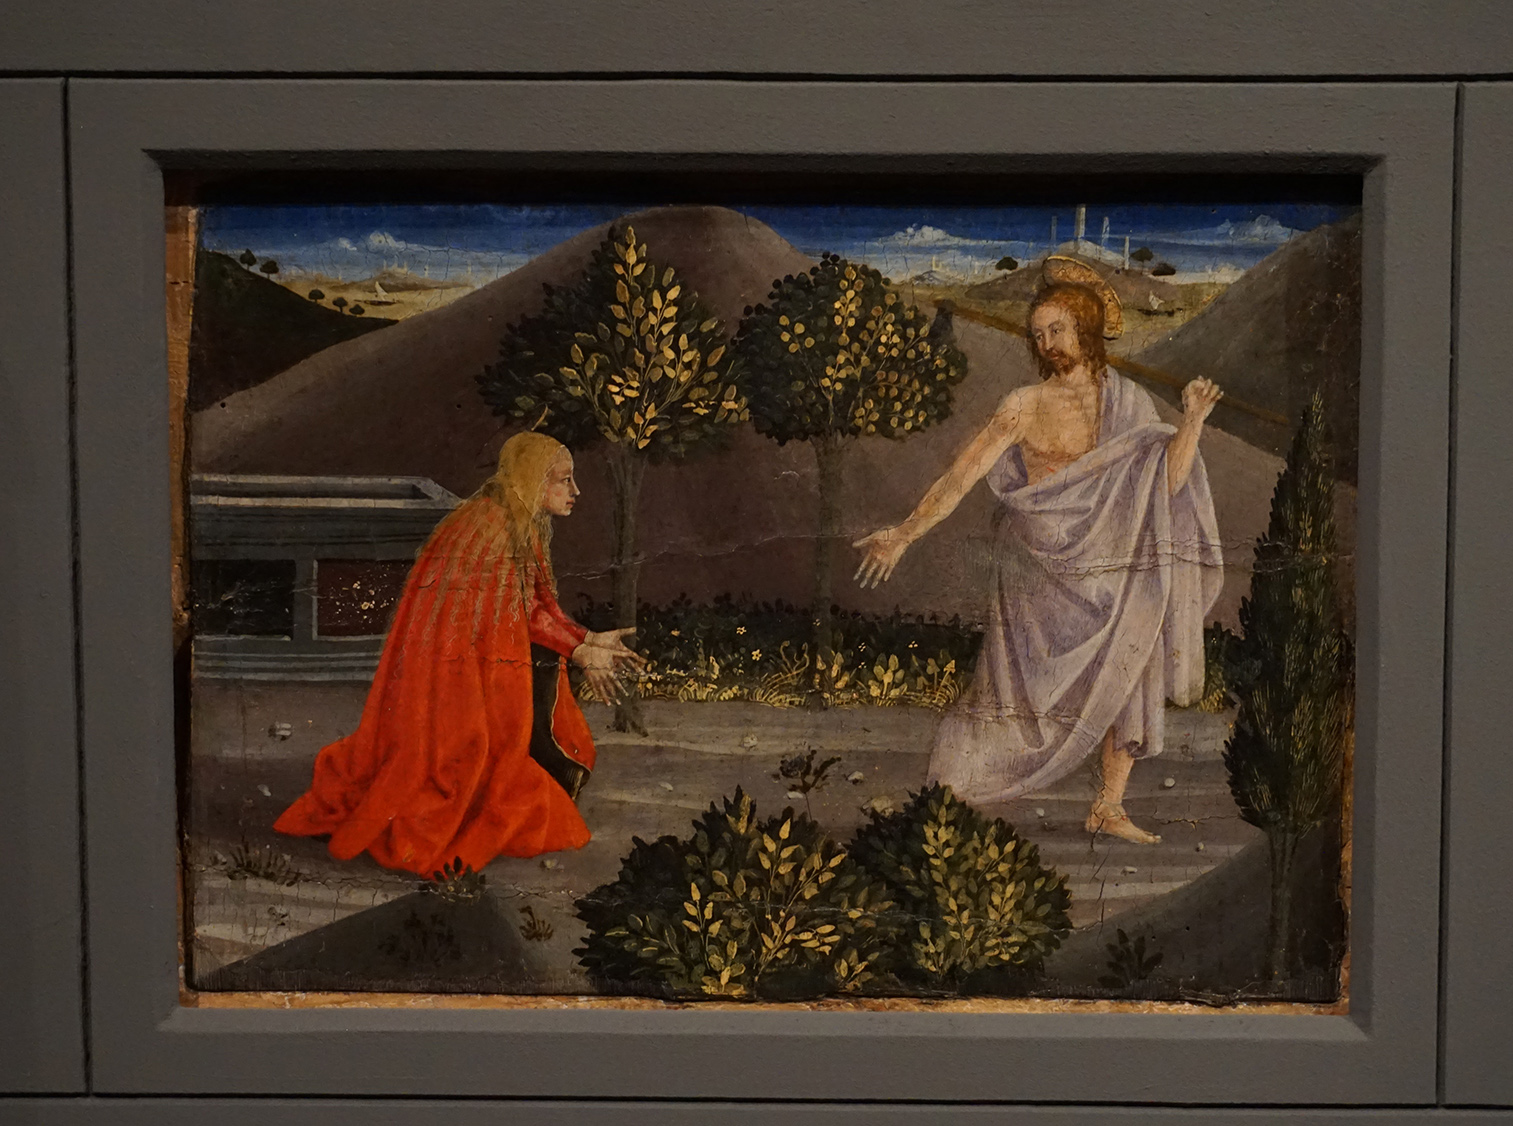 Image with Piero della Francesco